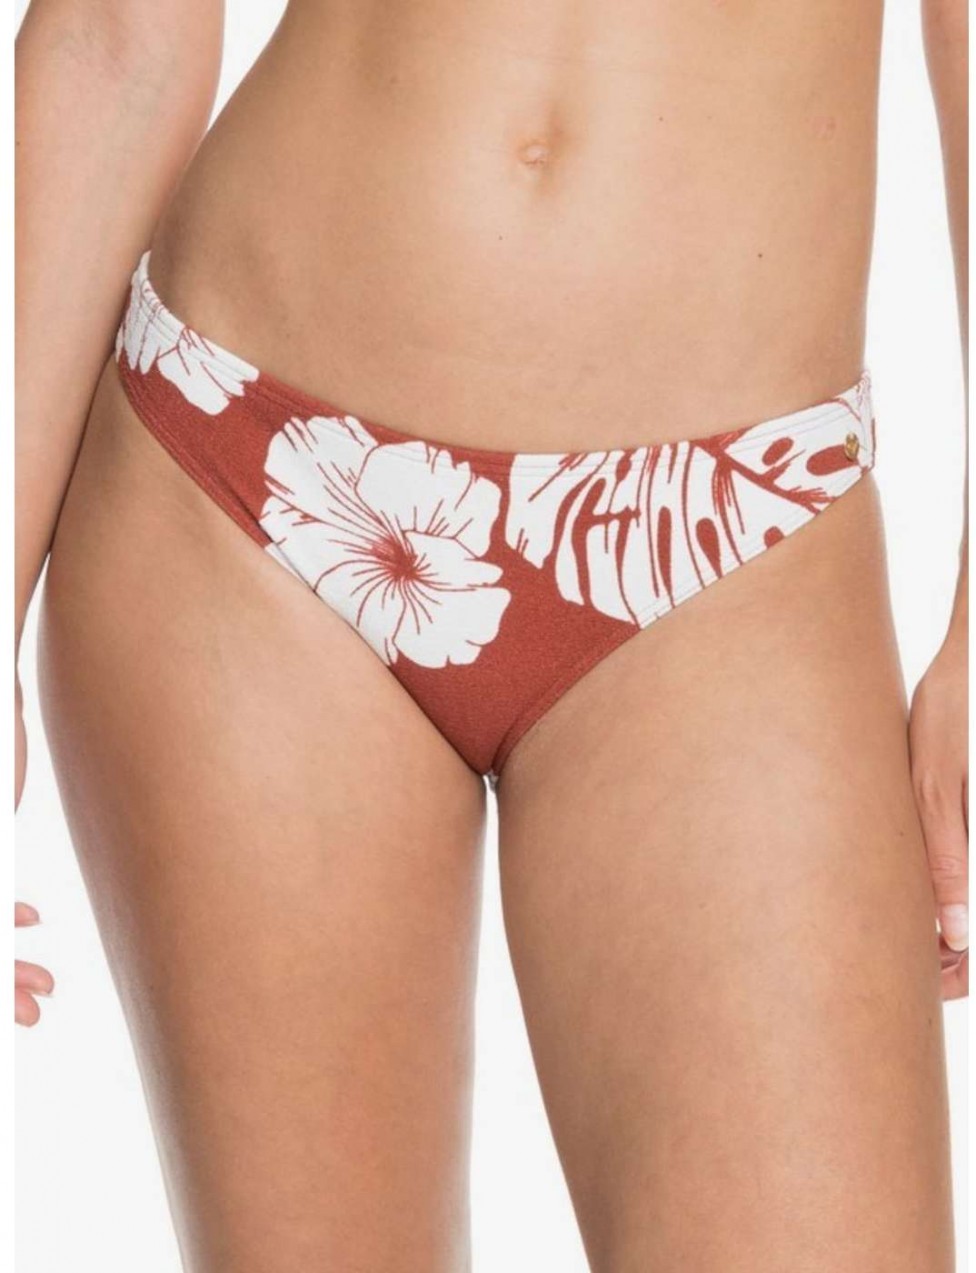 Women's bikini bottoms Roxy GARDEN TRIP REGULAR